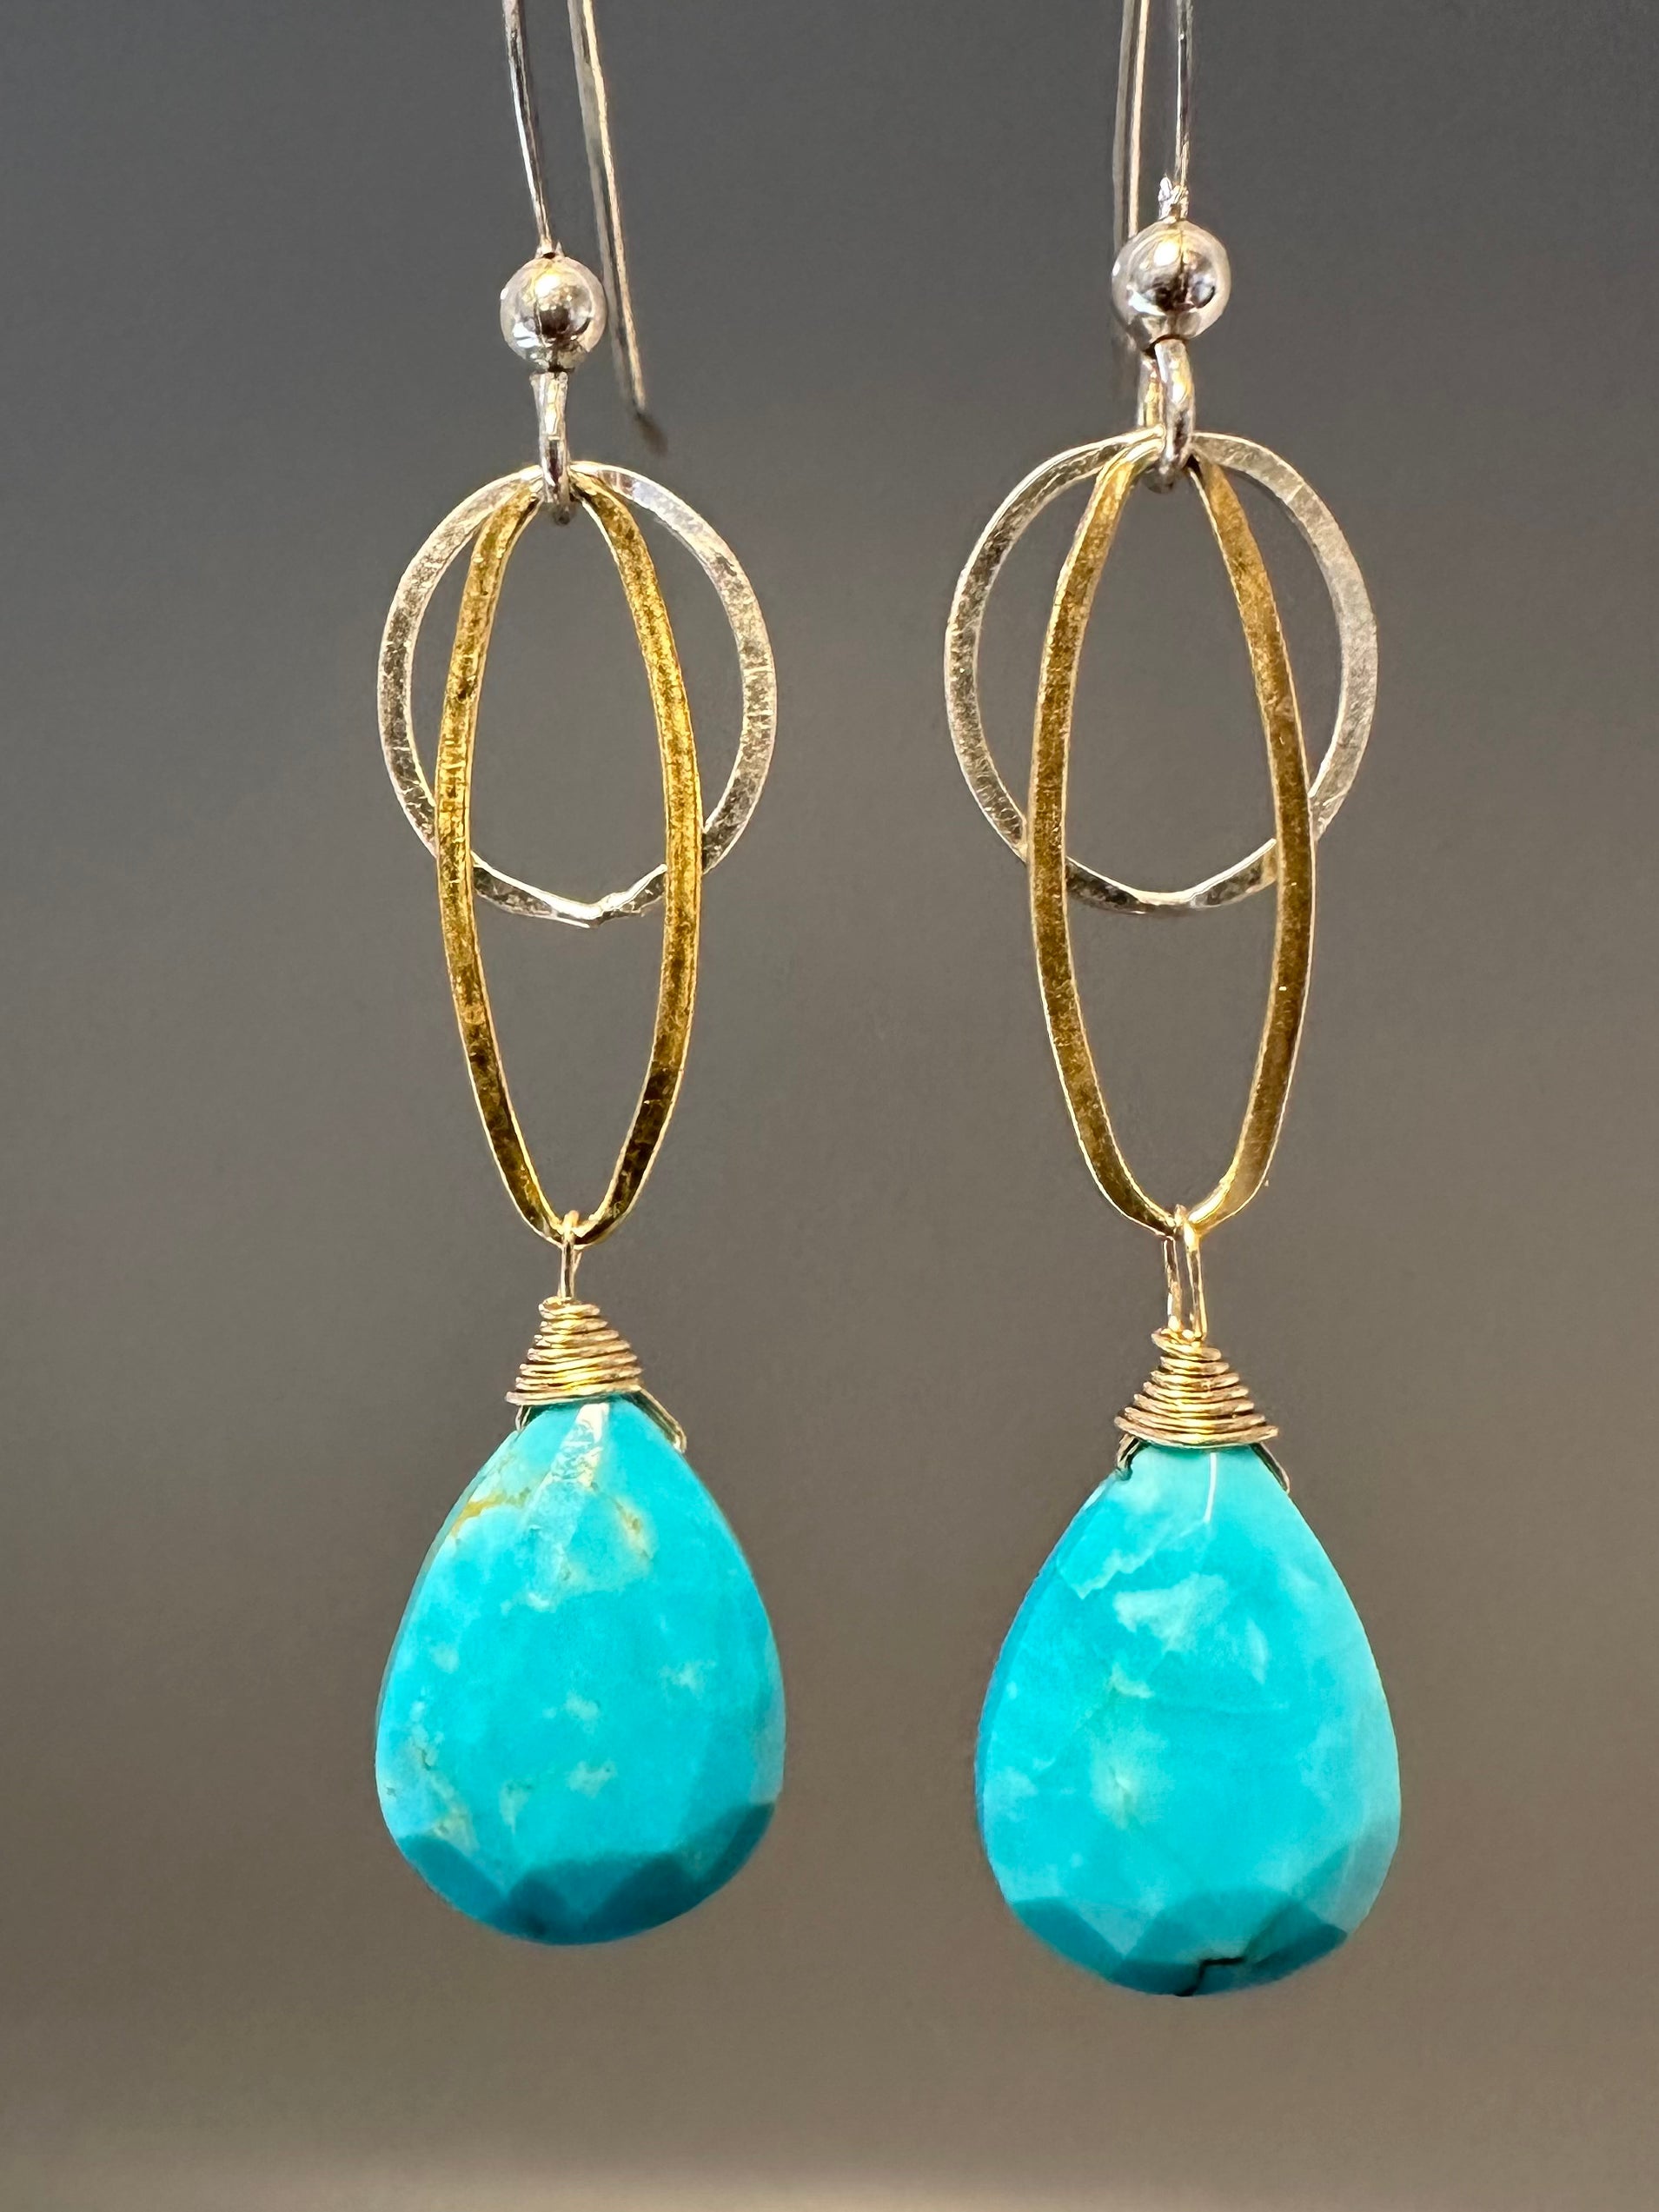 Turquoise Two-Tone Earrings